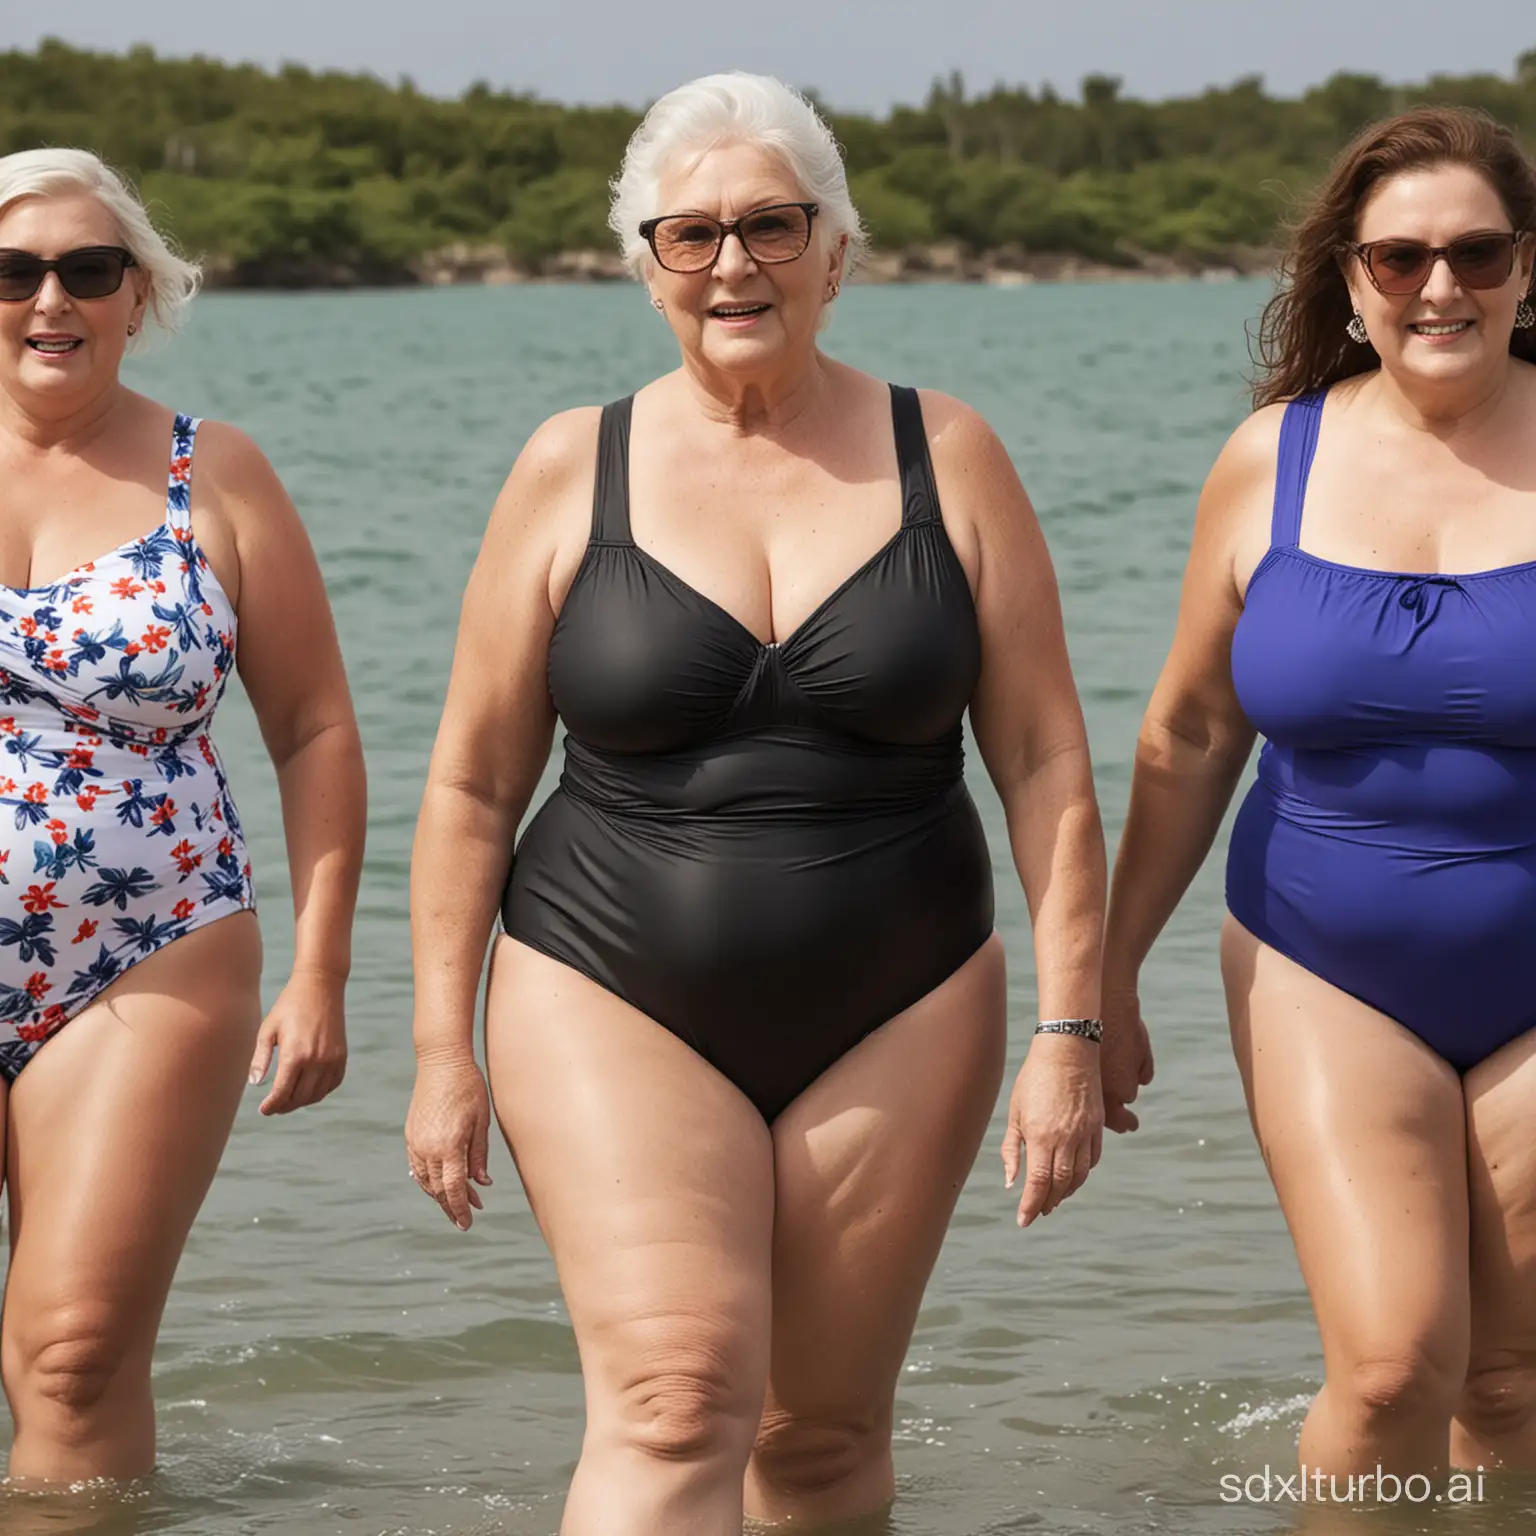 Senior-PlusSize-Women-Exercising-Democratic-Rights-in-Vibrant-Swimwear-on-Election-Day